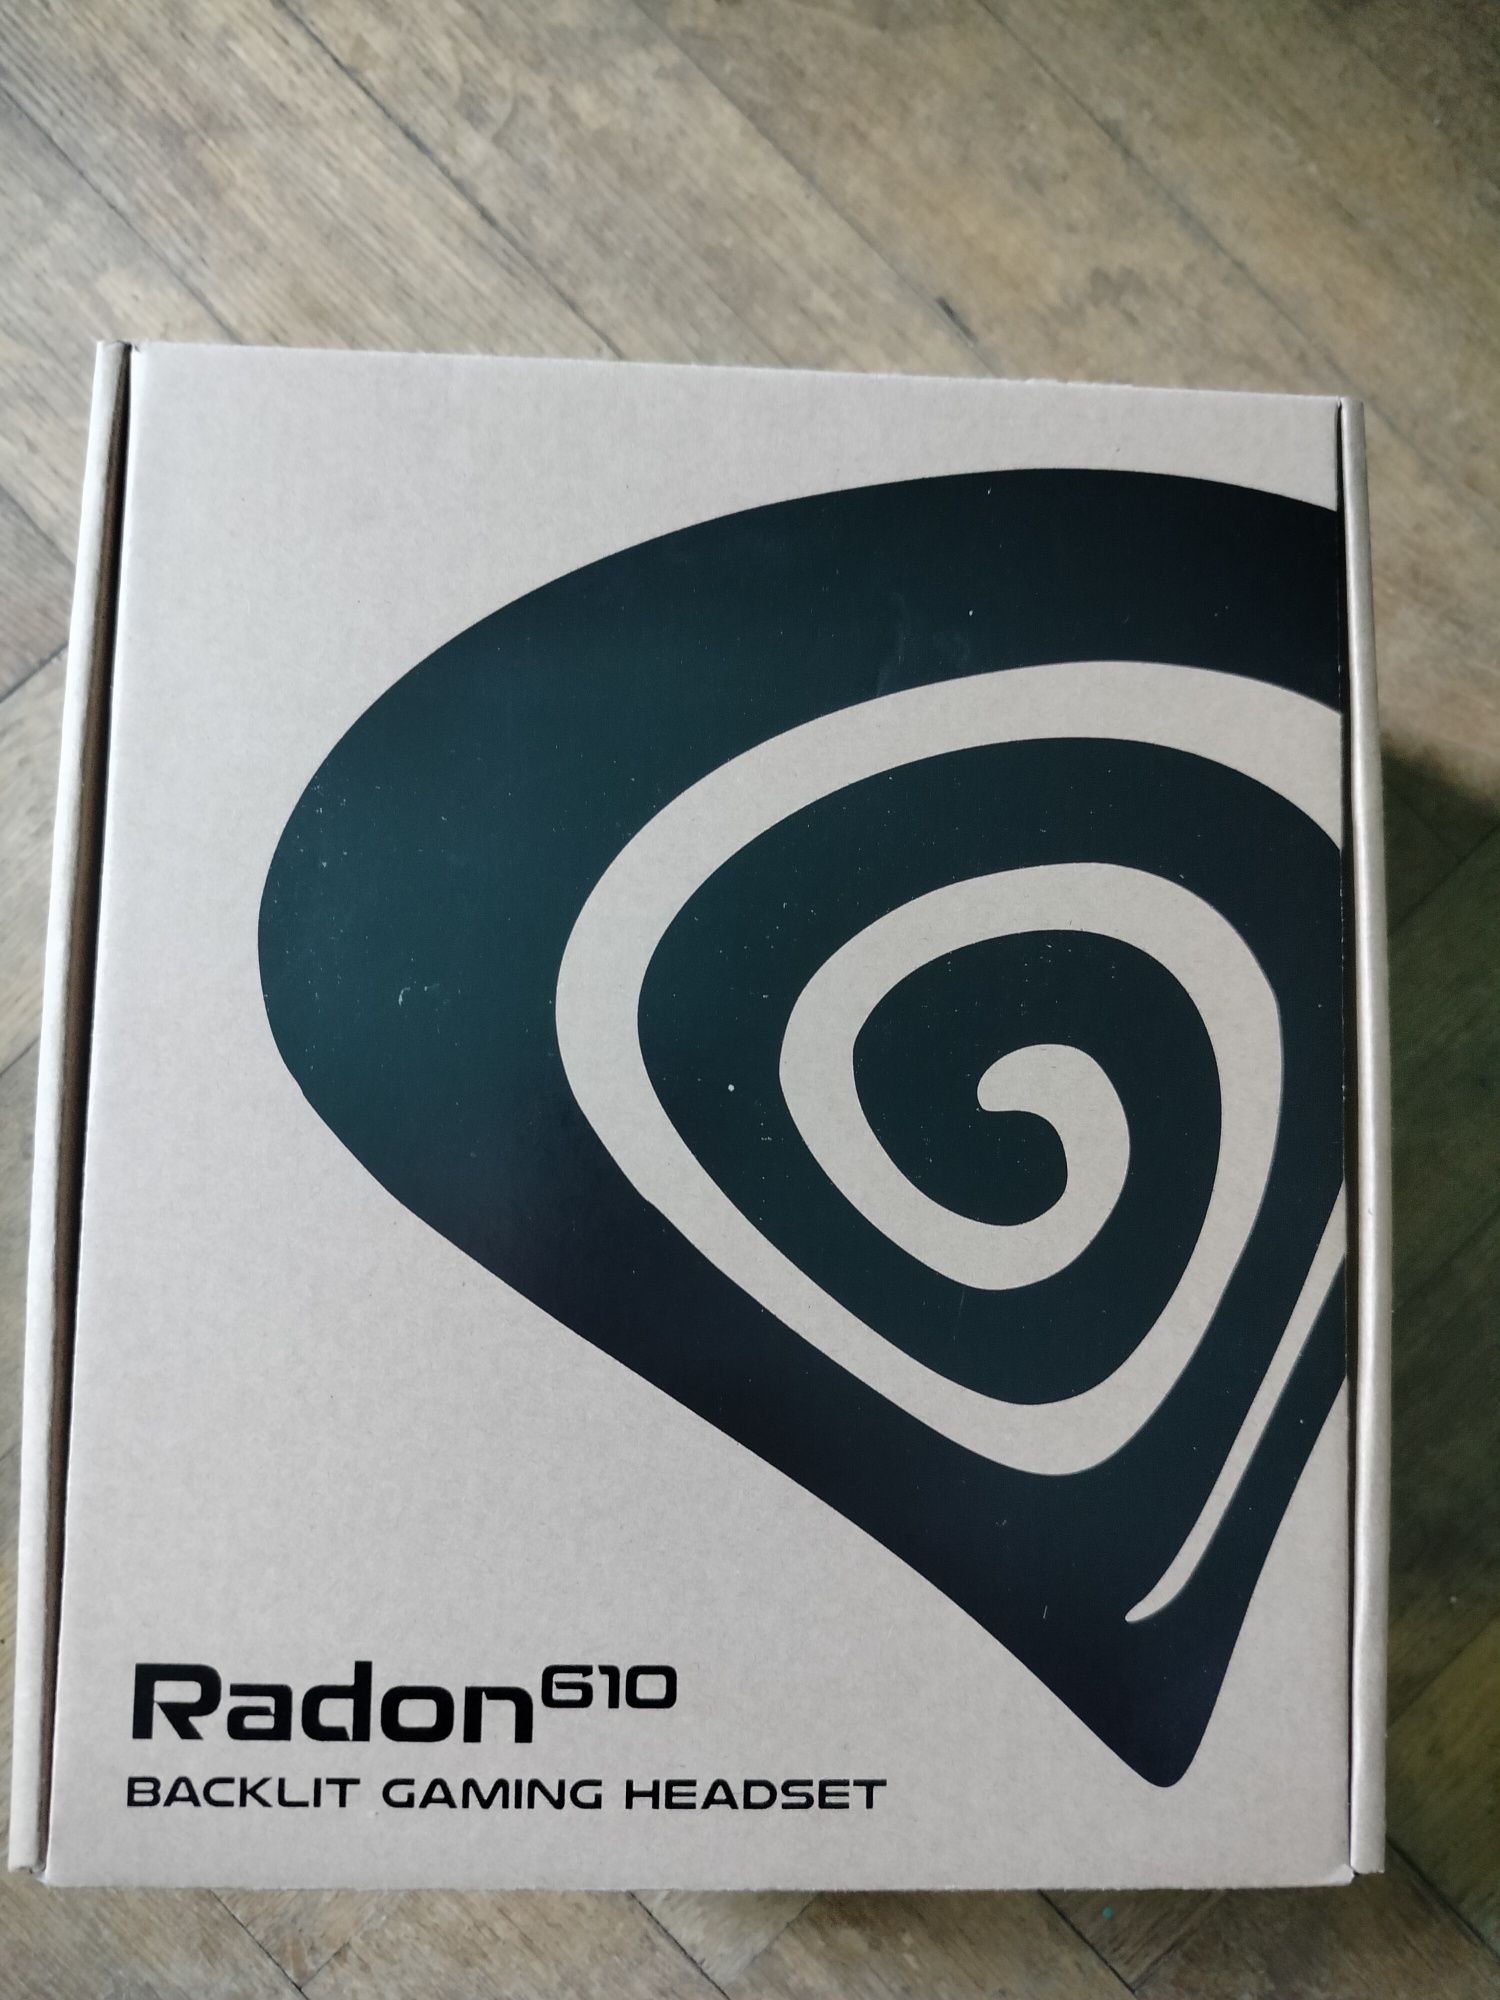 Słuchawki Genesis radon 610